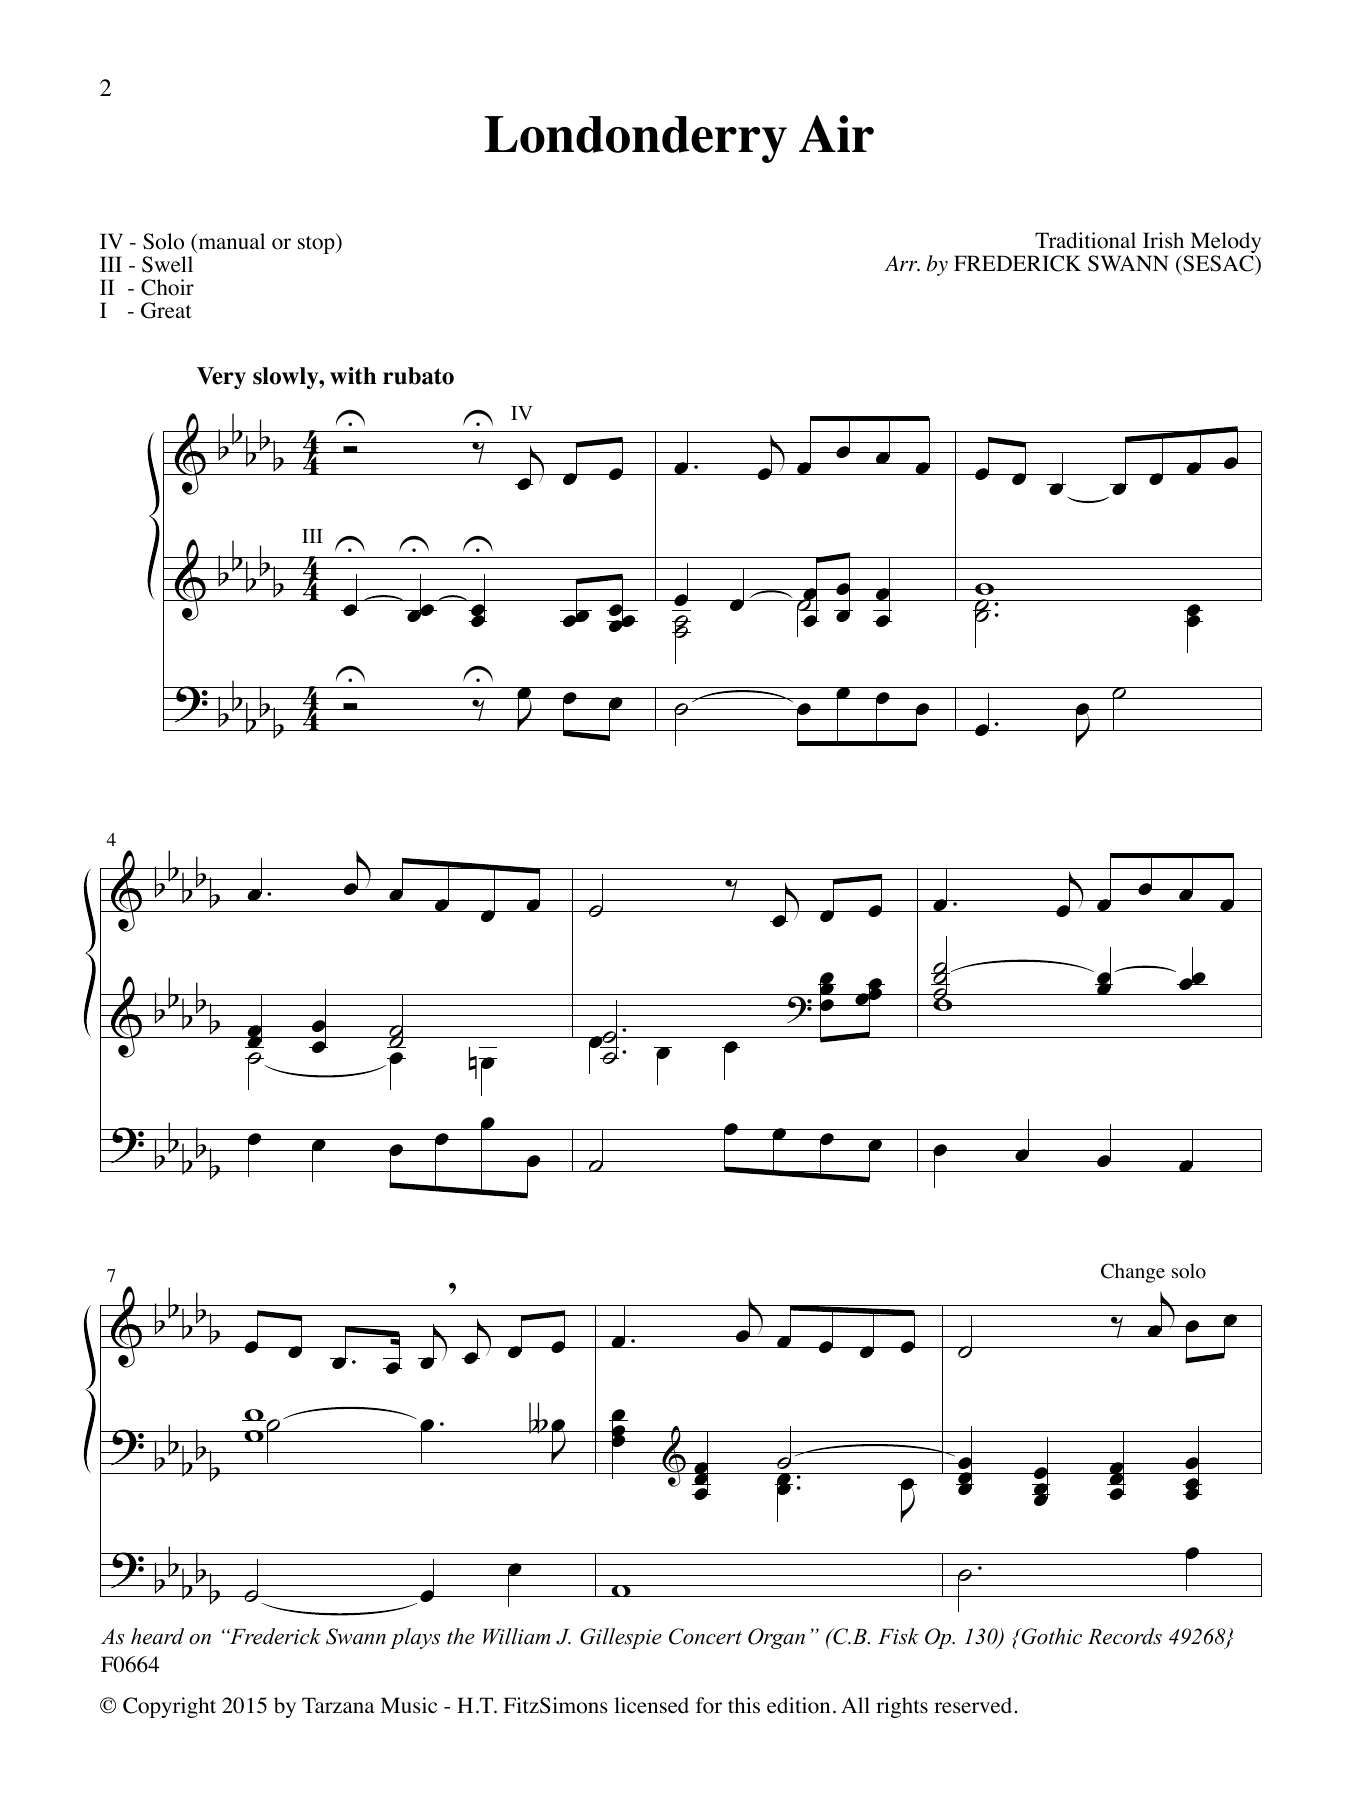 Download Frederick Swann Improvisation on Londonderry Air Sheet Music